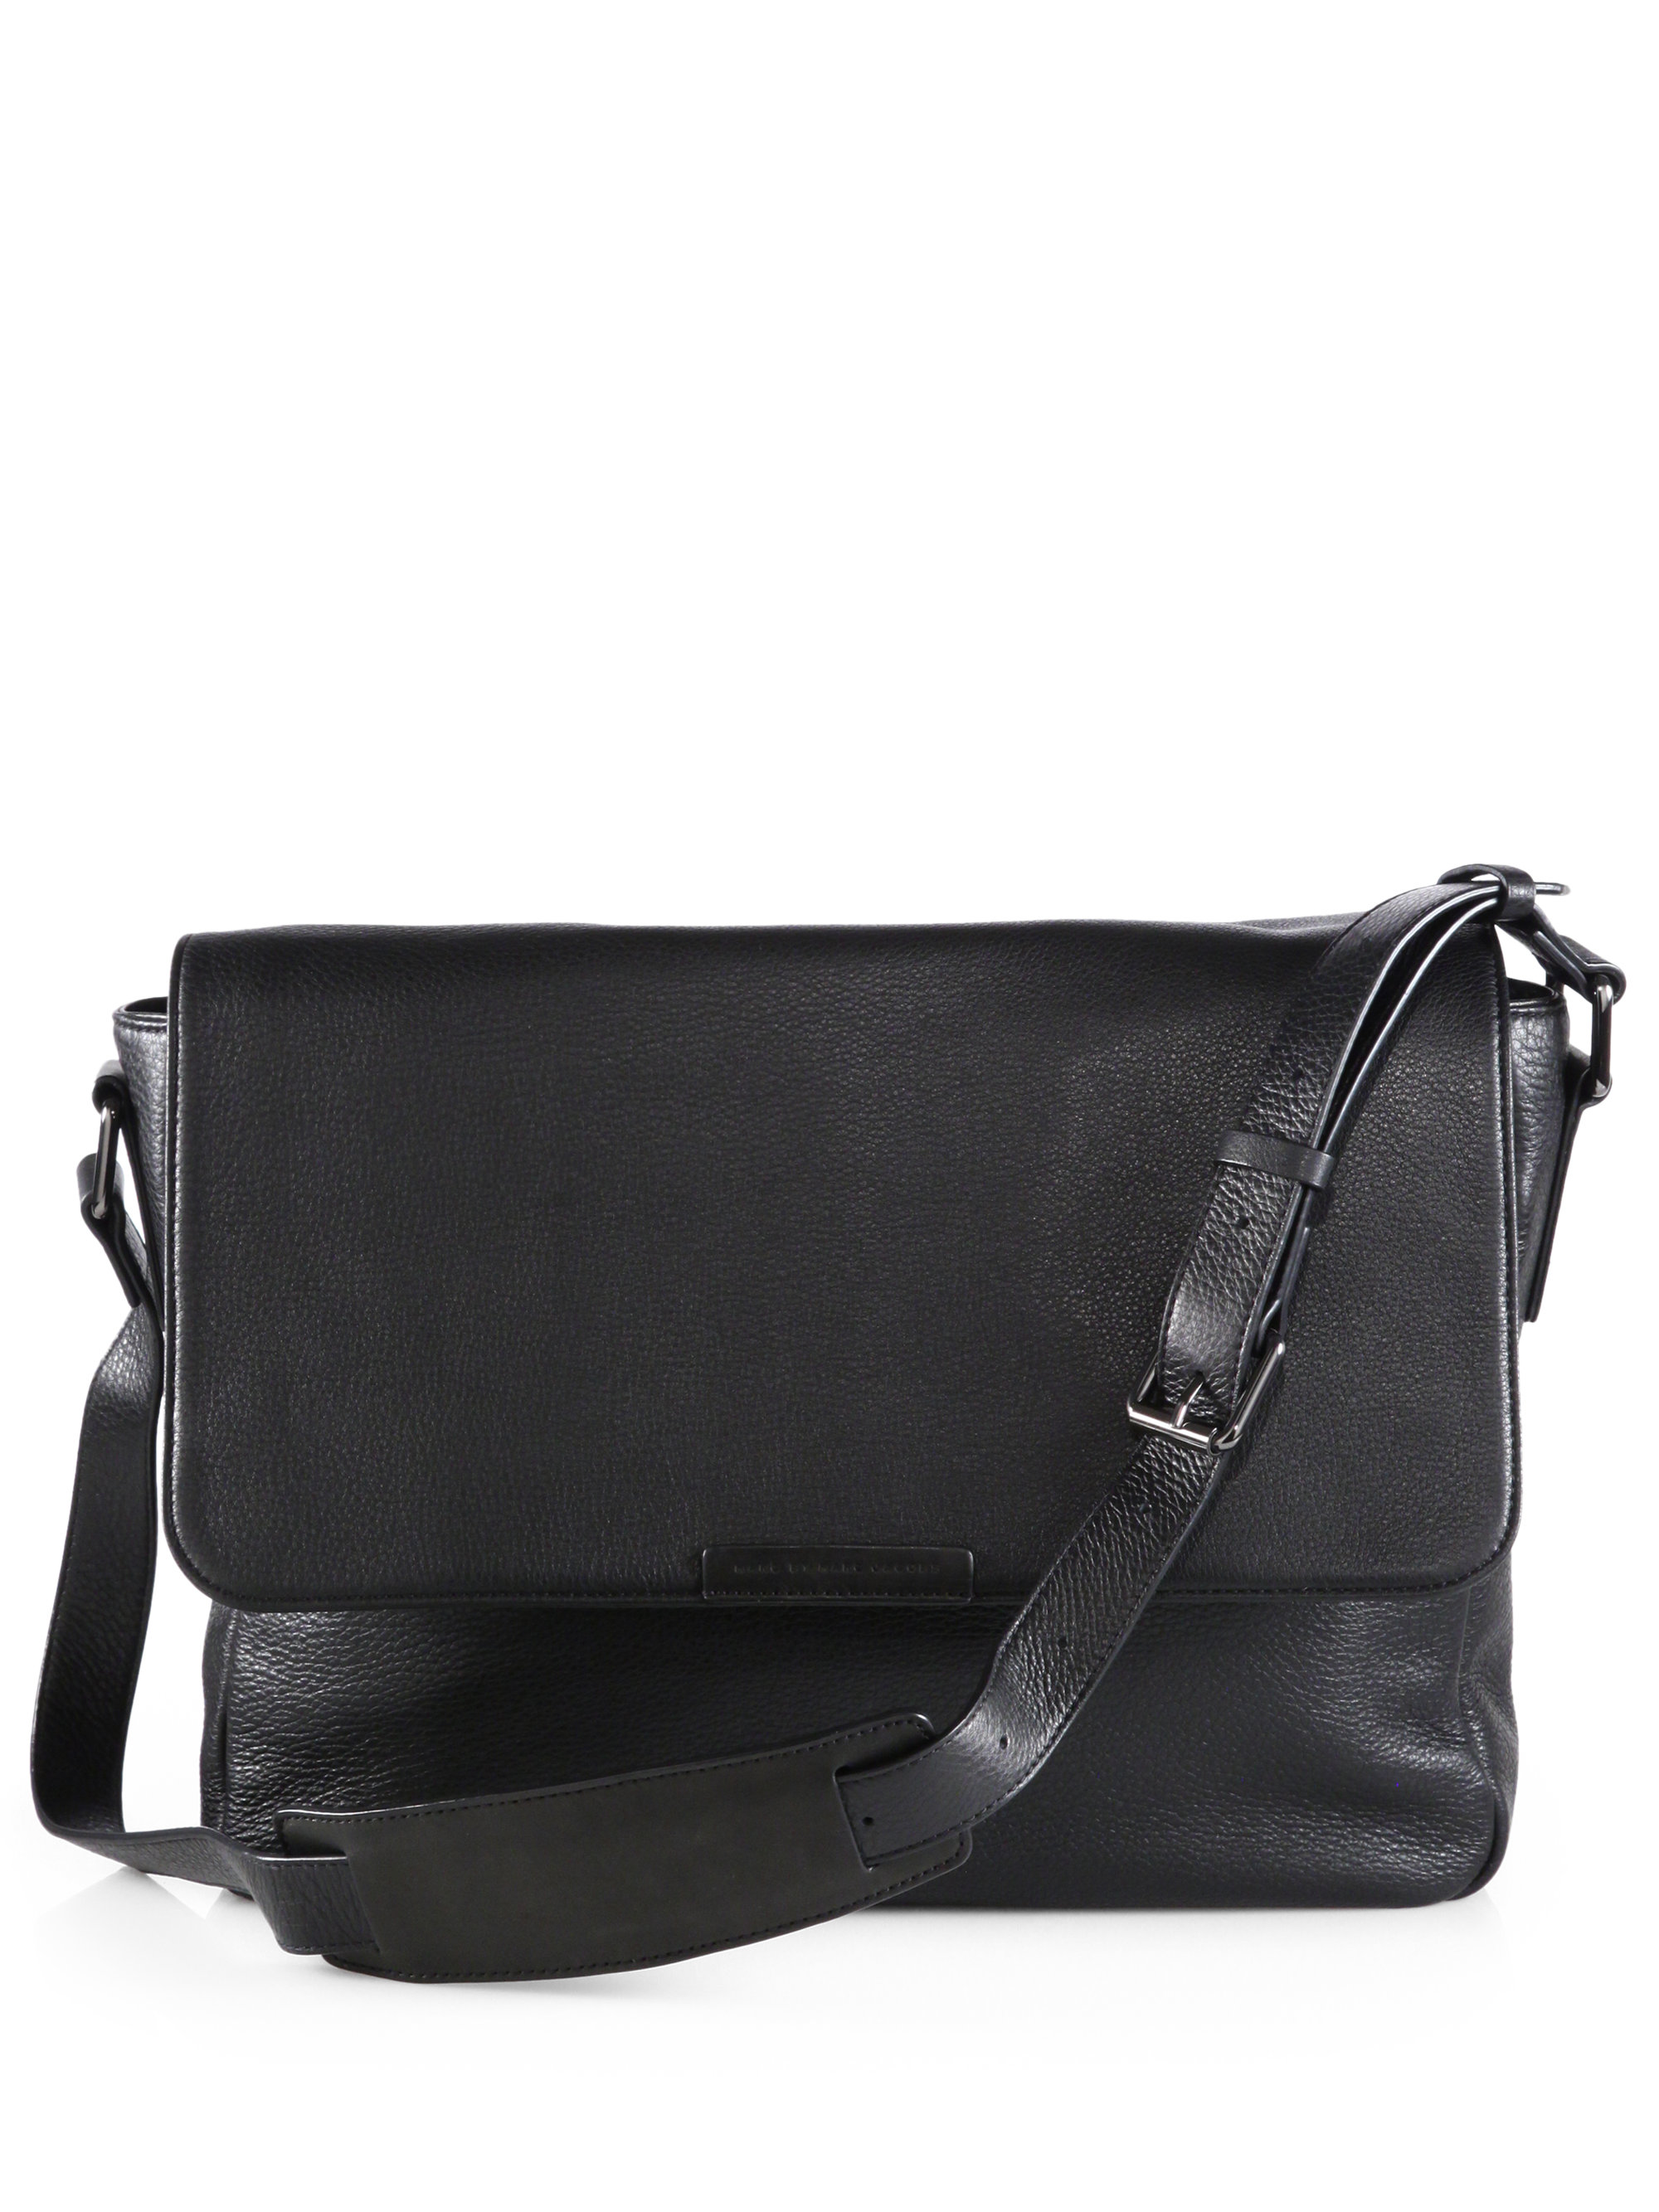 Marc By Marc Jacobs Pebbled Leather Messenger Bag in Black for Men | Lyst